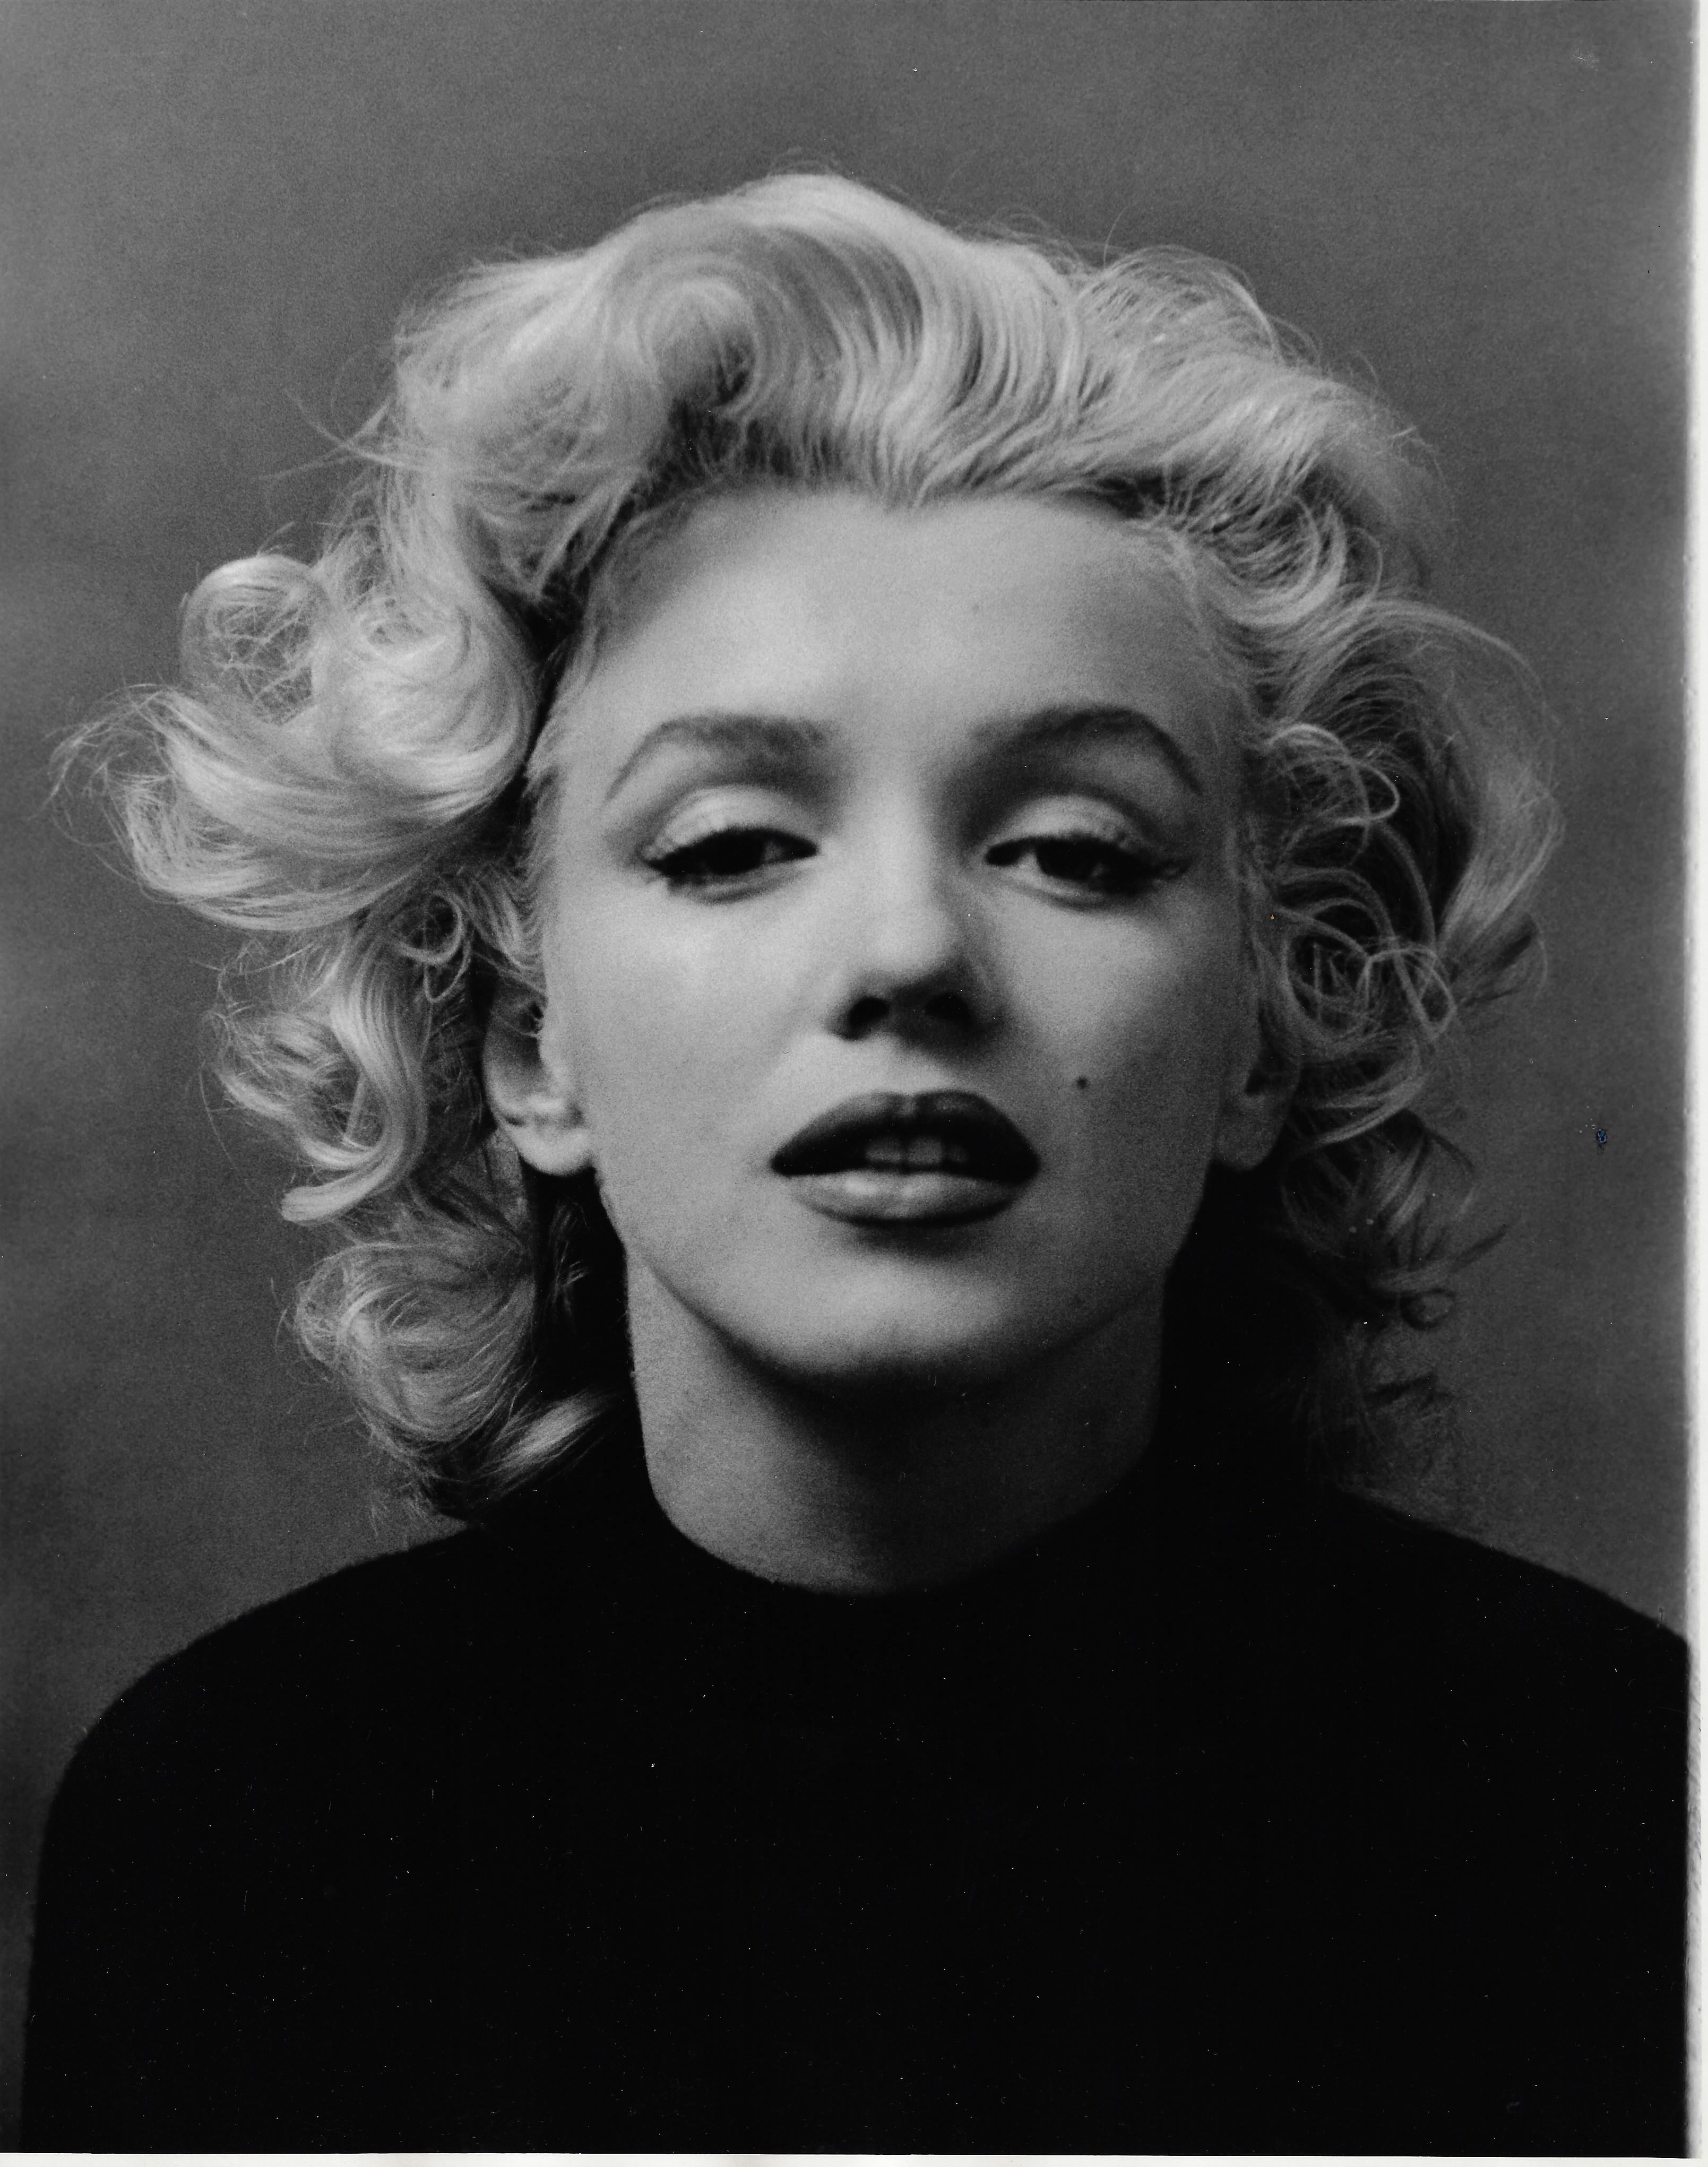 Ben Ross Portrait Photograph - Marilyn Monroe (Icon), Hollywood, 1953